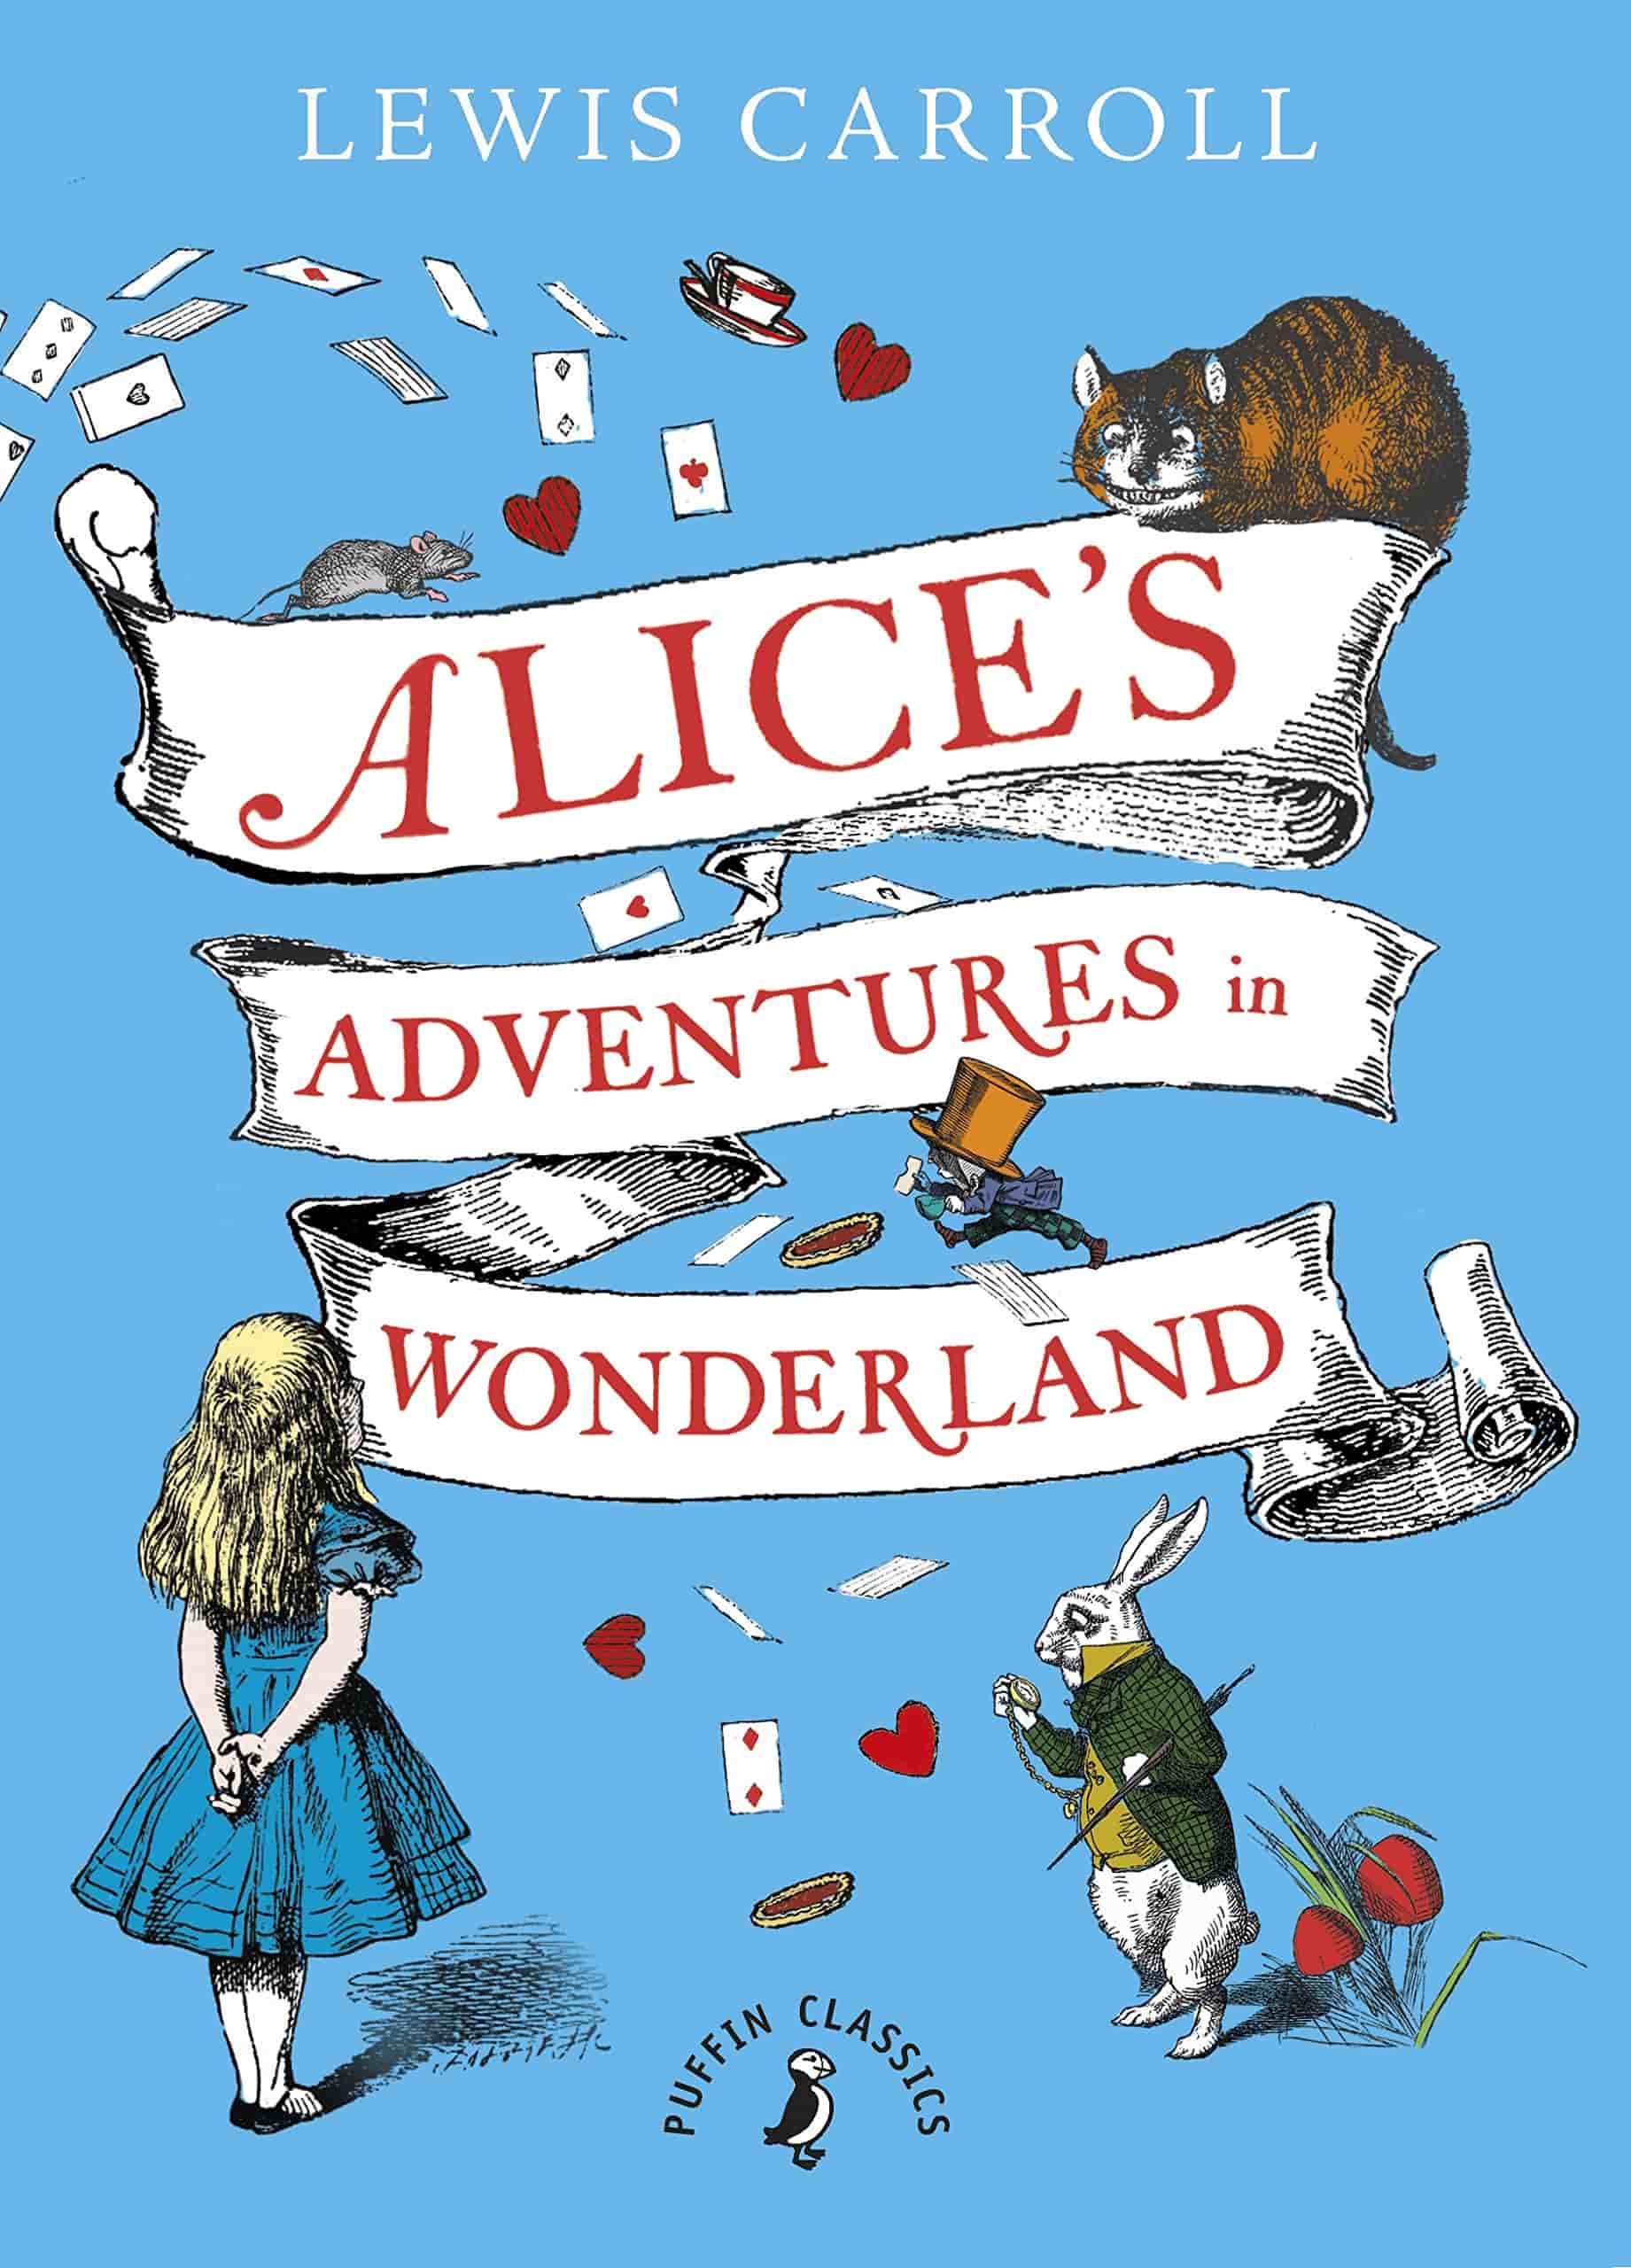  Alice's Adventures in Wonderland by Lewis Carroll